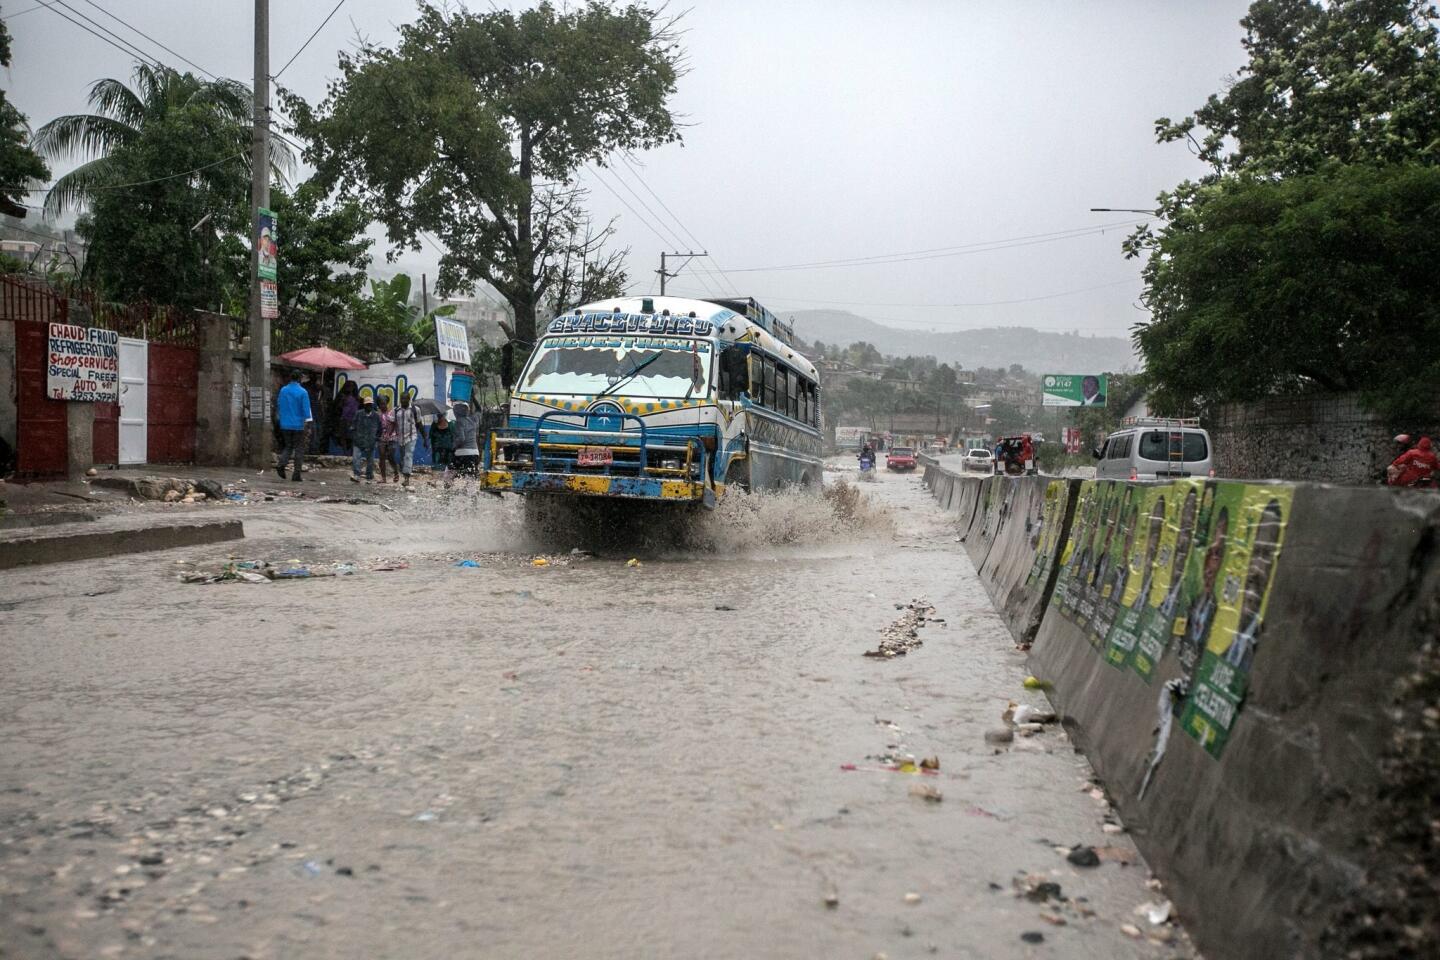 A bus drives through a flooded street in Port-au-Prince, Haiti, on Oct. 4, 2016.